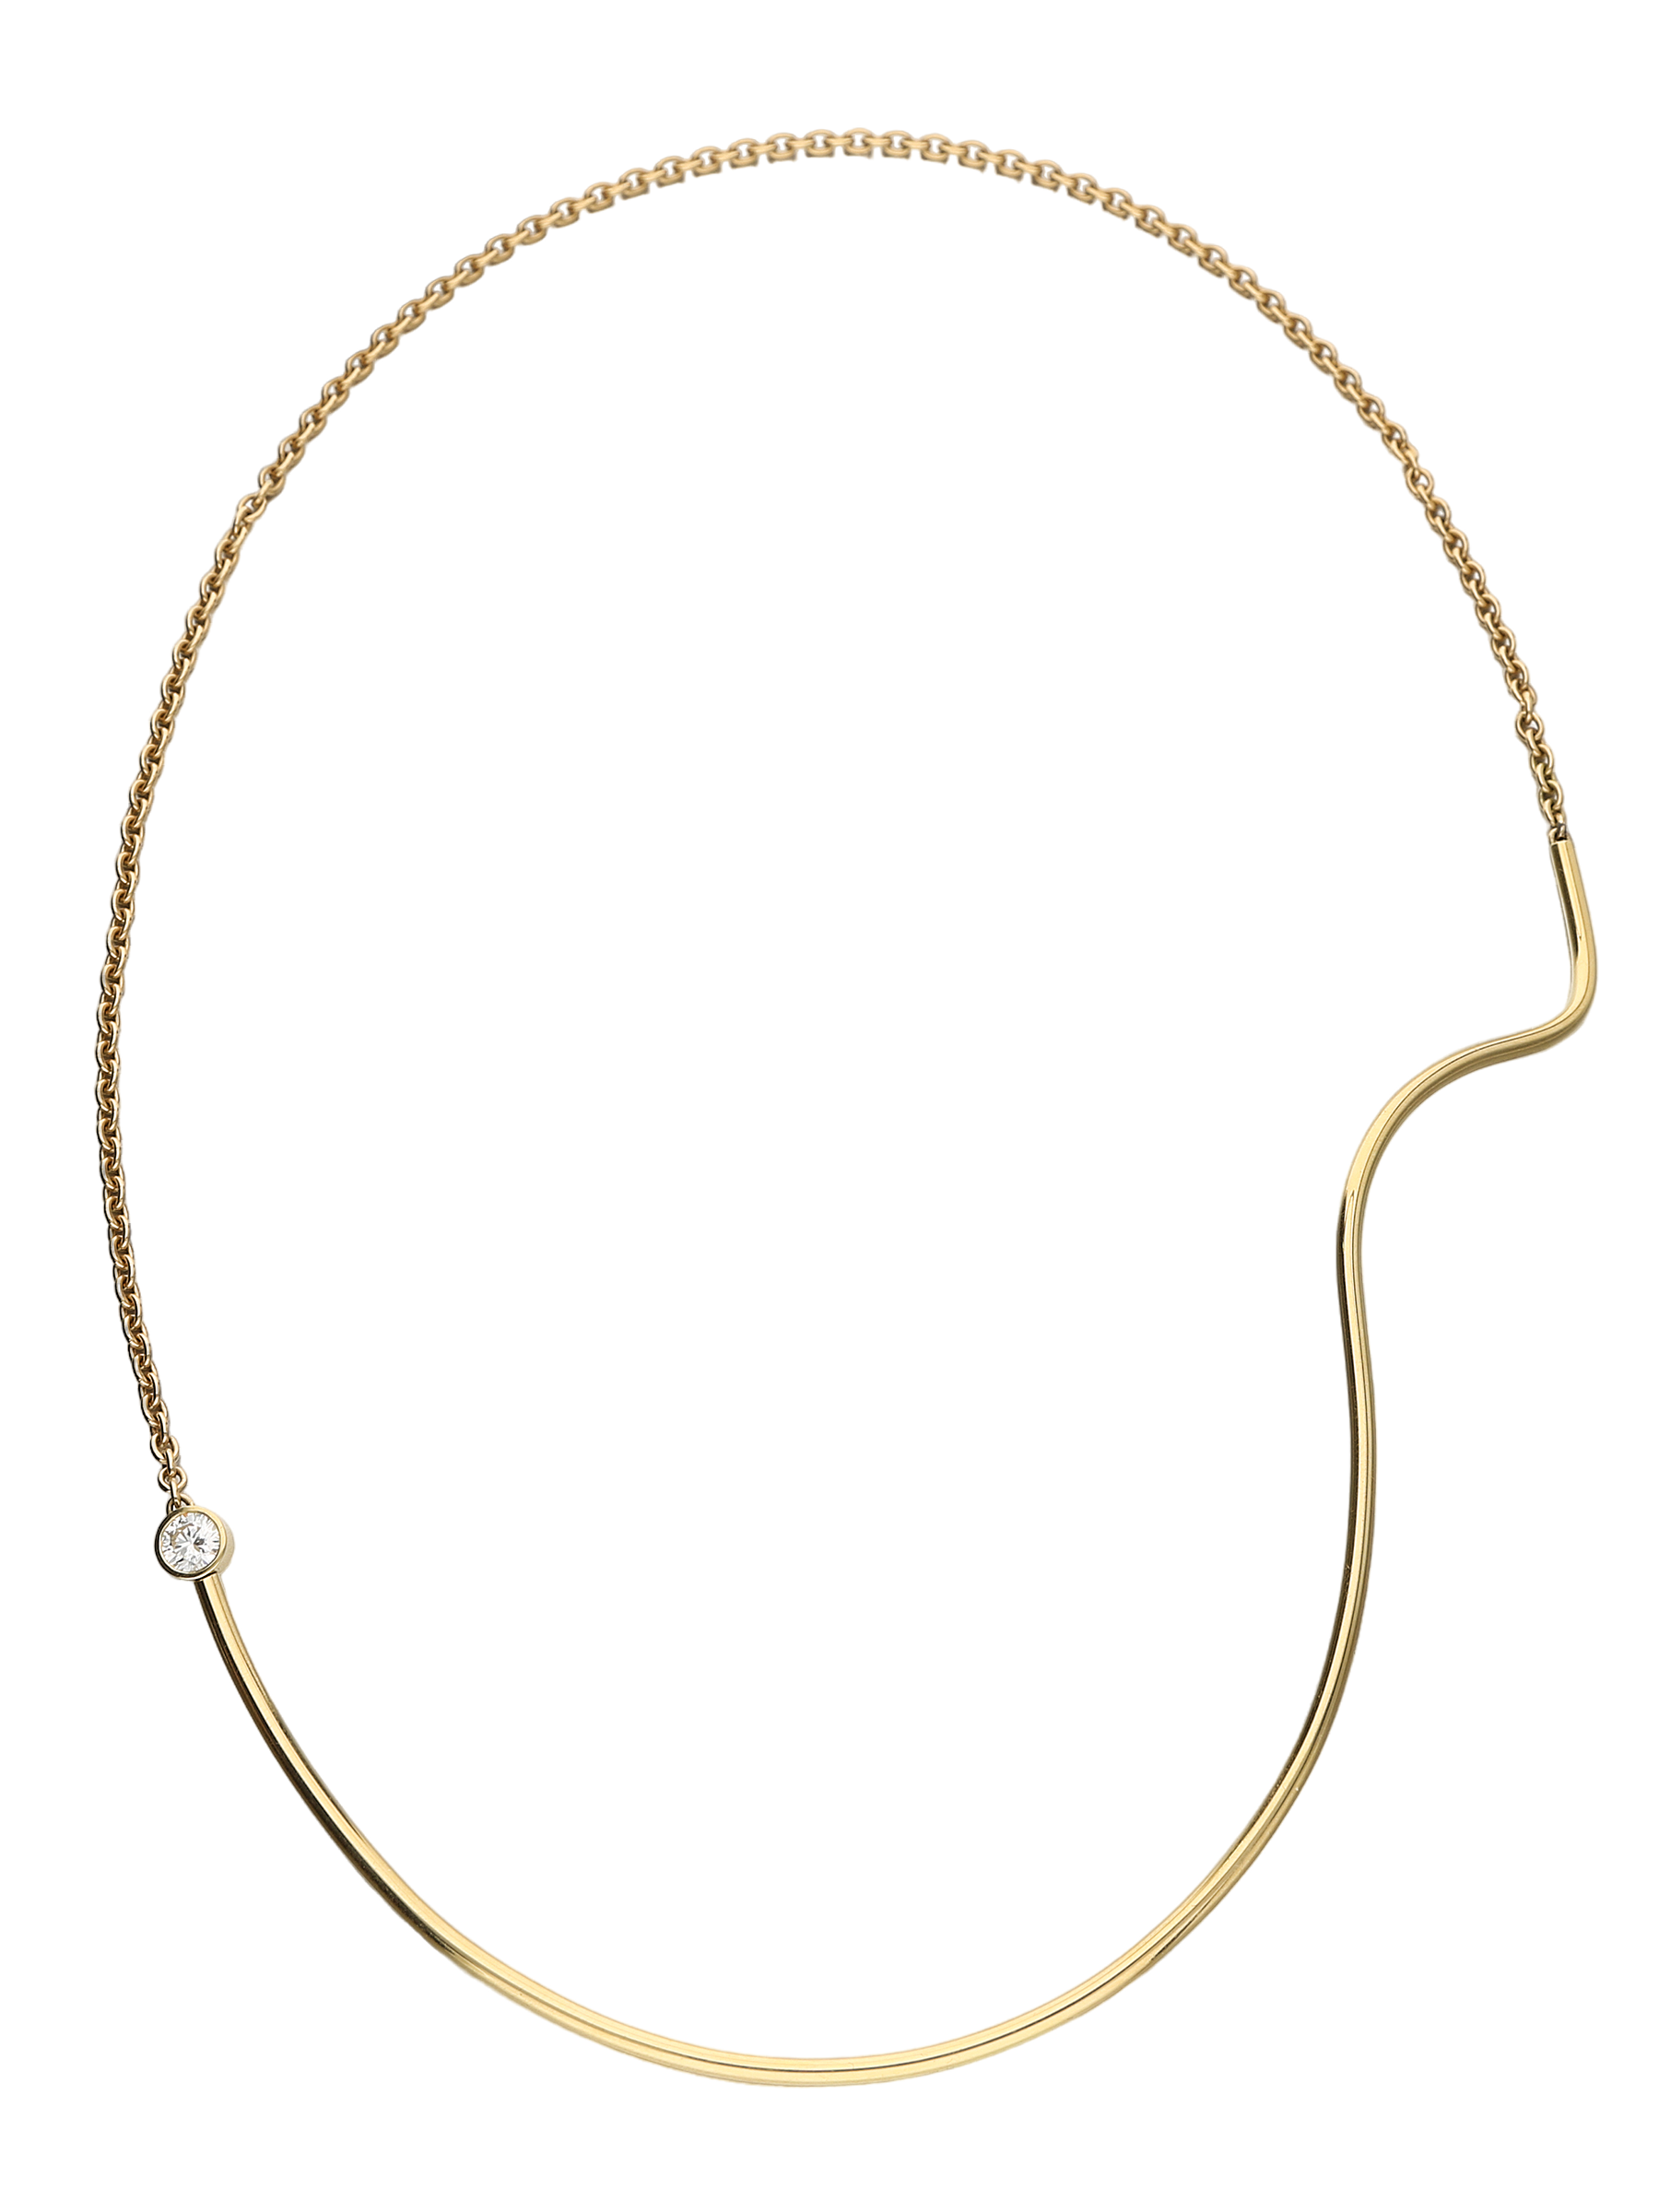 Abacus diamond wave necklace